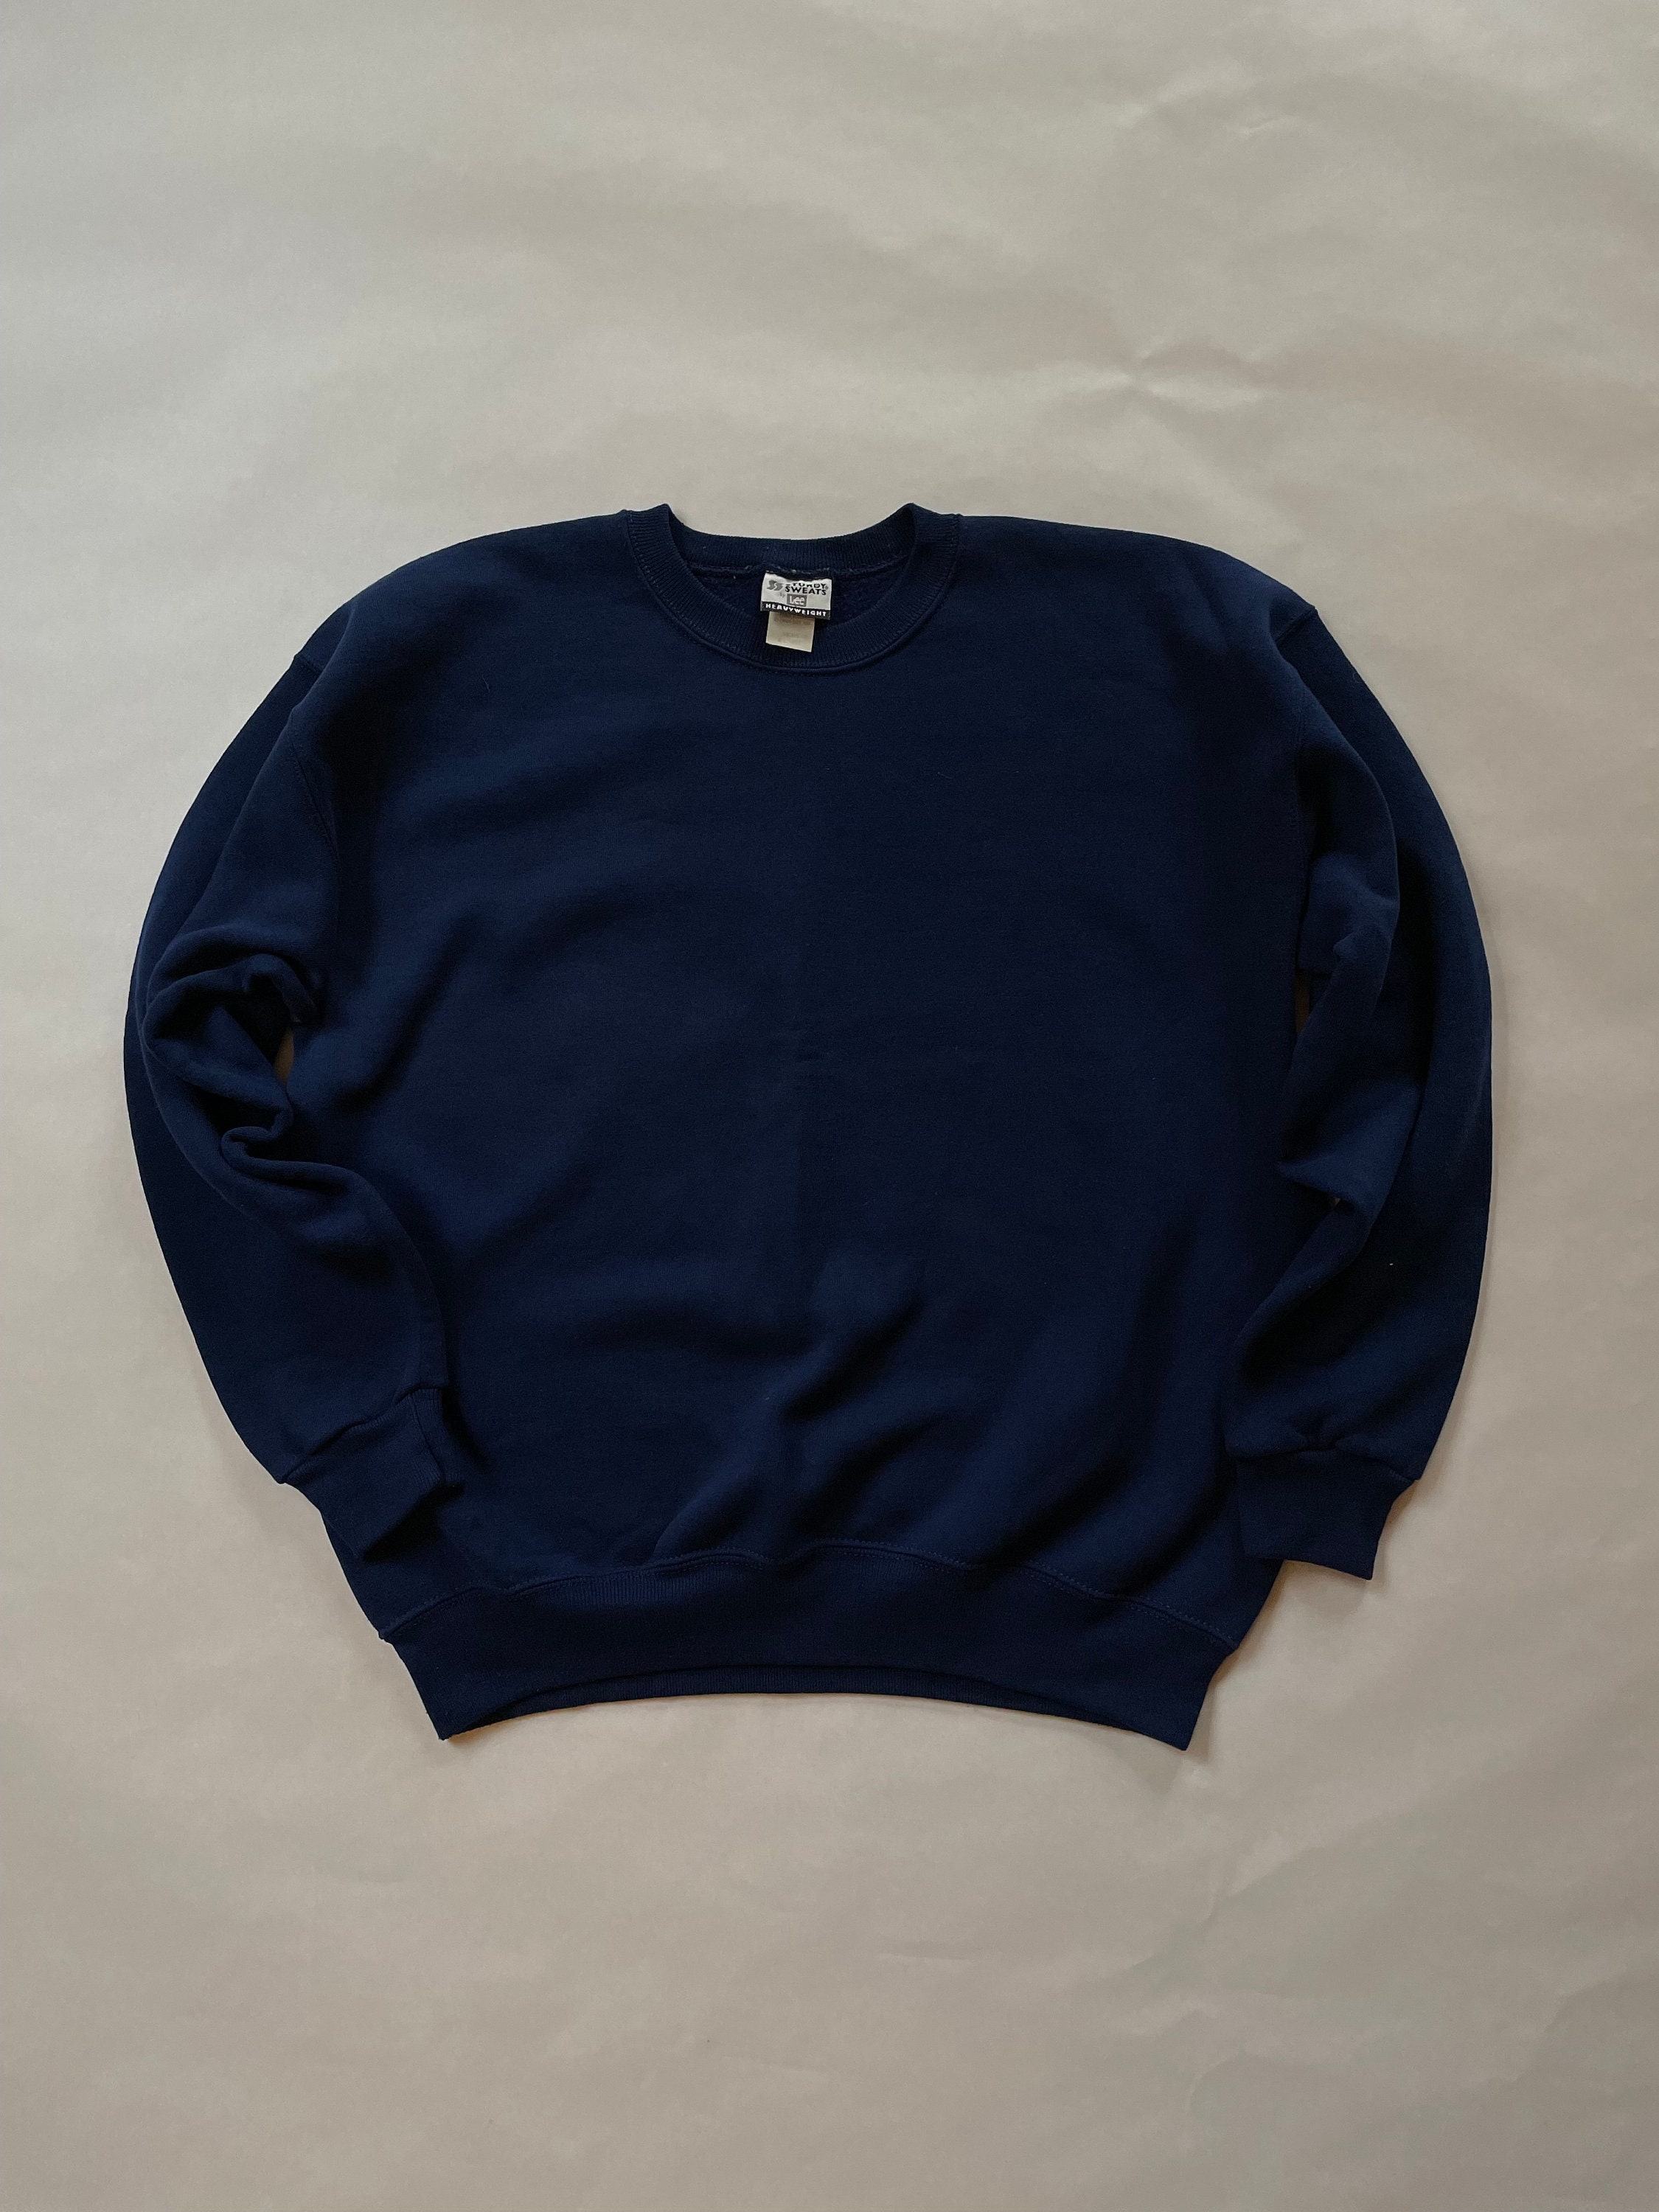 1990s XL Lee Sturdy Sweats Navy Blue Crewneck Sweatshirt Made in USA - Etsy